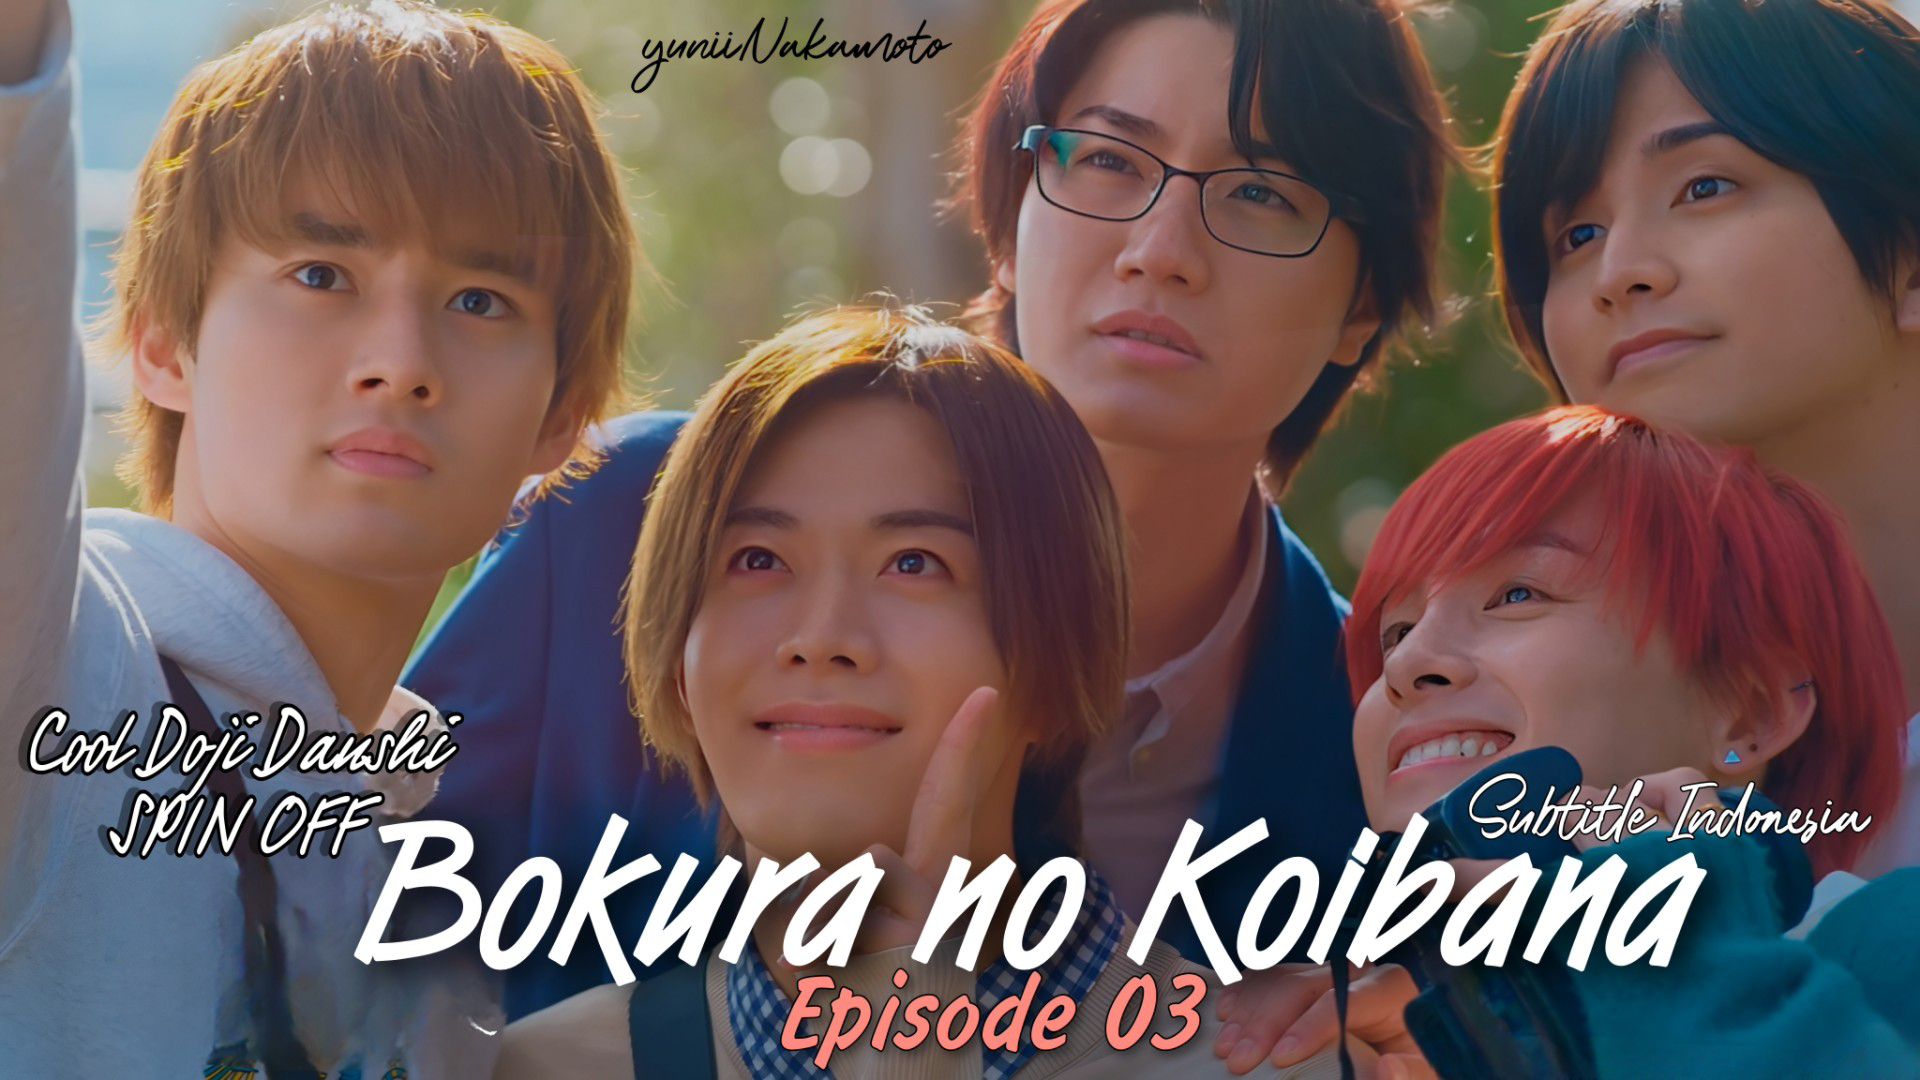 BOKURA NO KOIBANA Episode 03 (Cool Doji Danshi SPIN OFF) Subtitle Indonesia  by CHStudio♡ - BiliBili